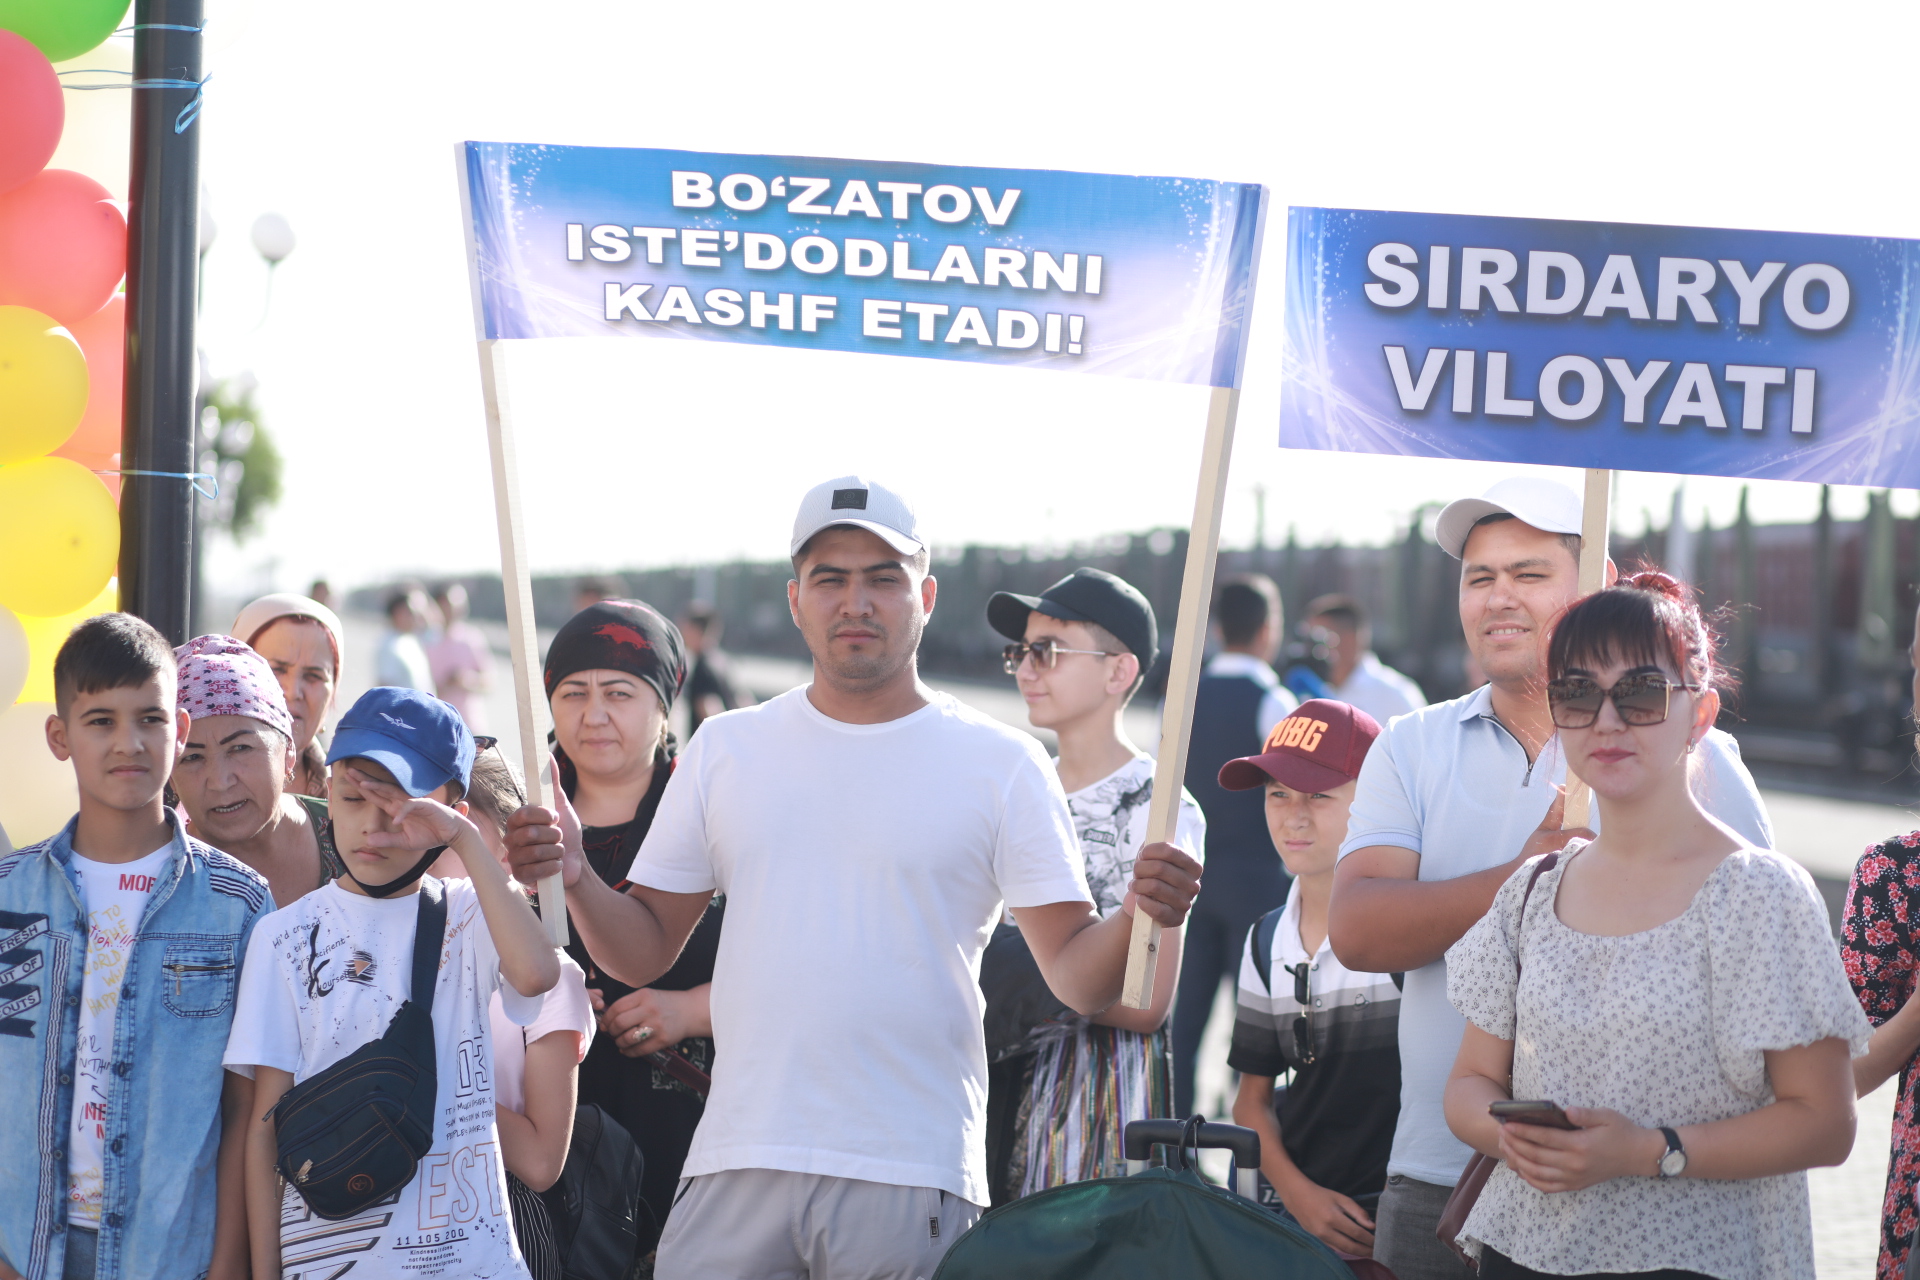 Участники Bo‘zatov FEST прибыли в Каракалпакстан 